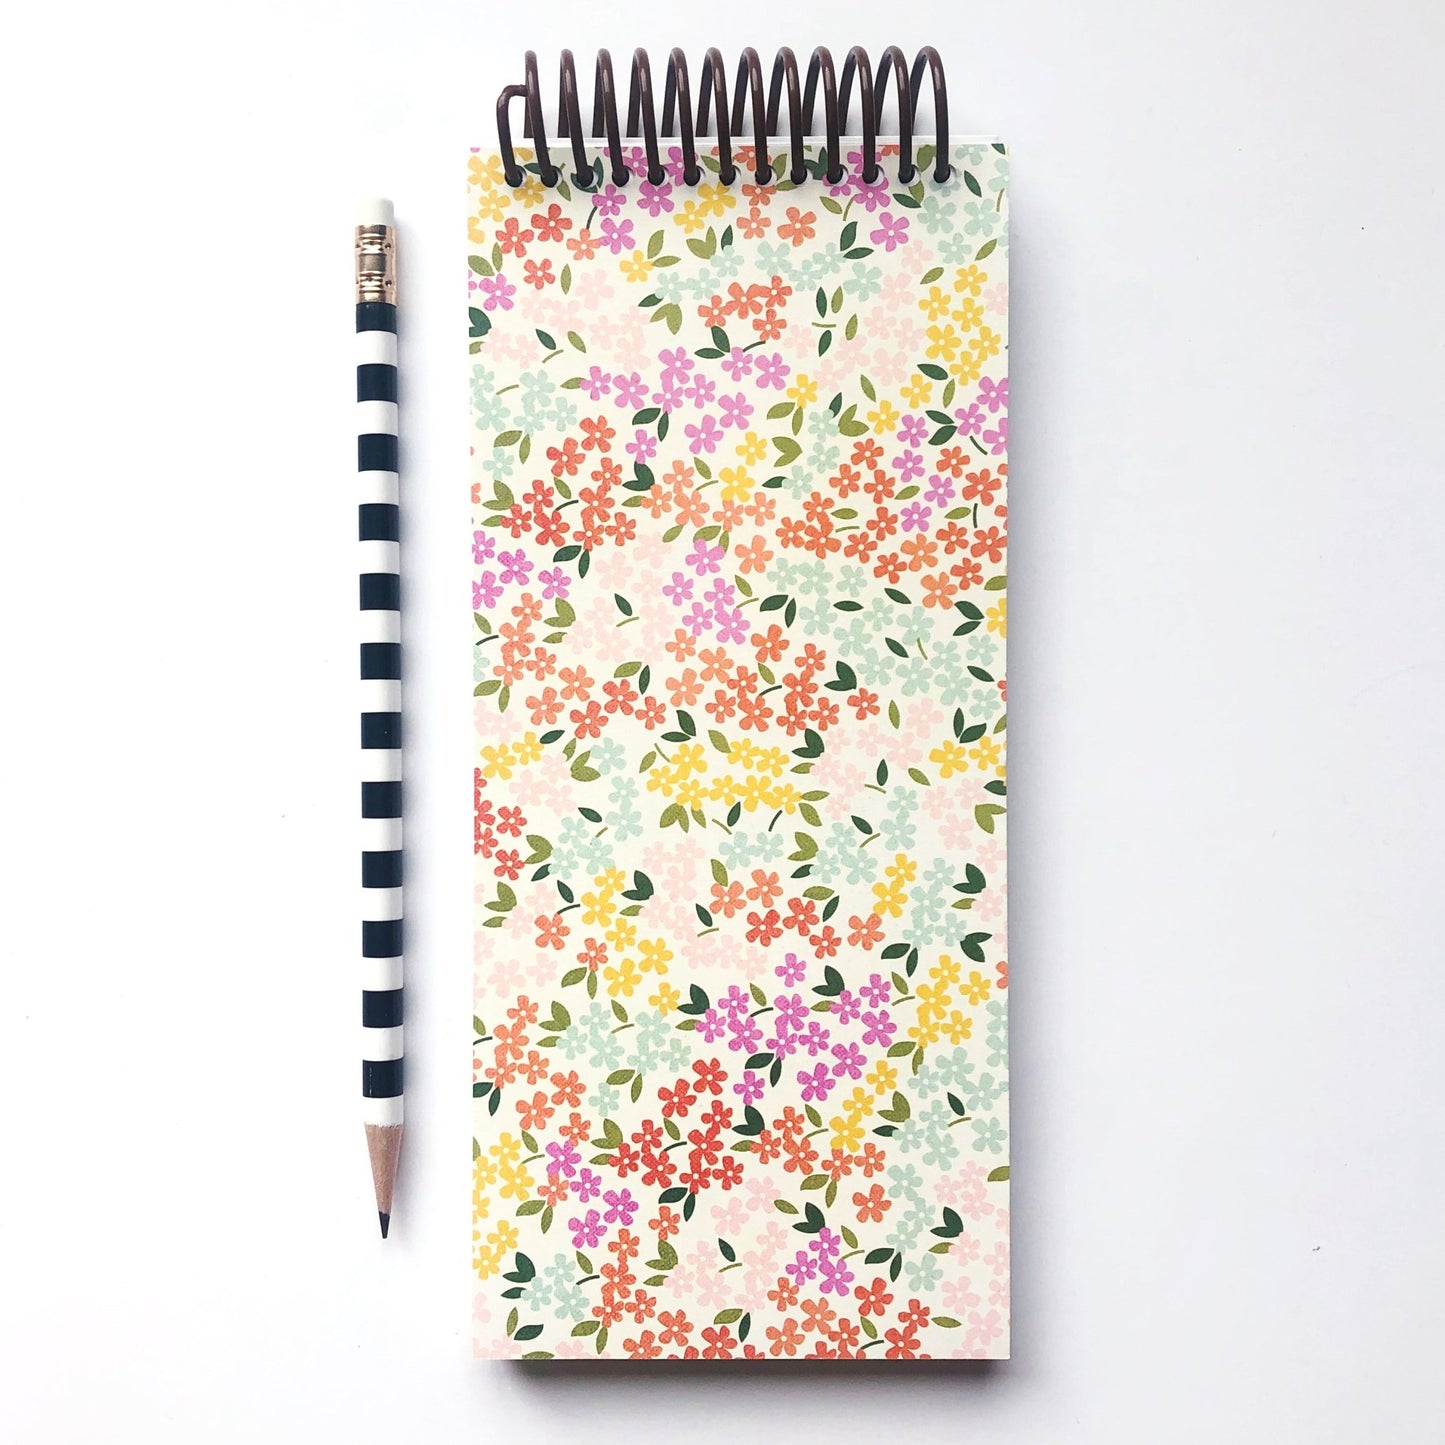 Notepads: Bright + Fun